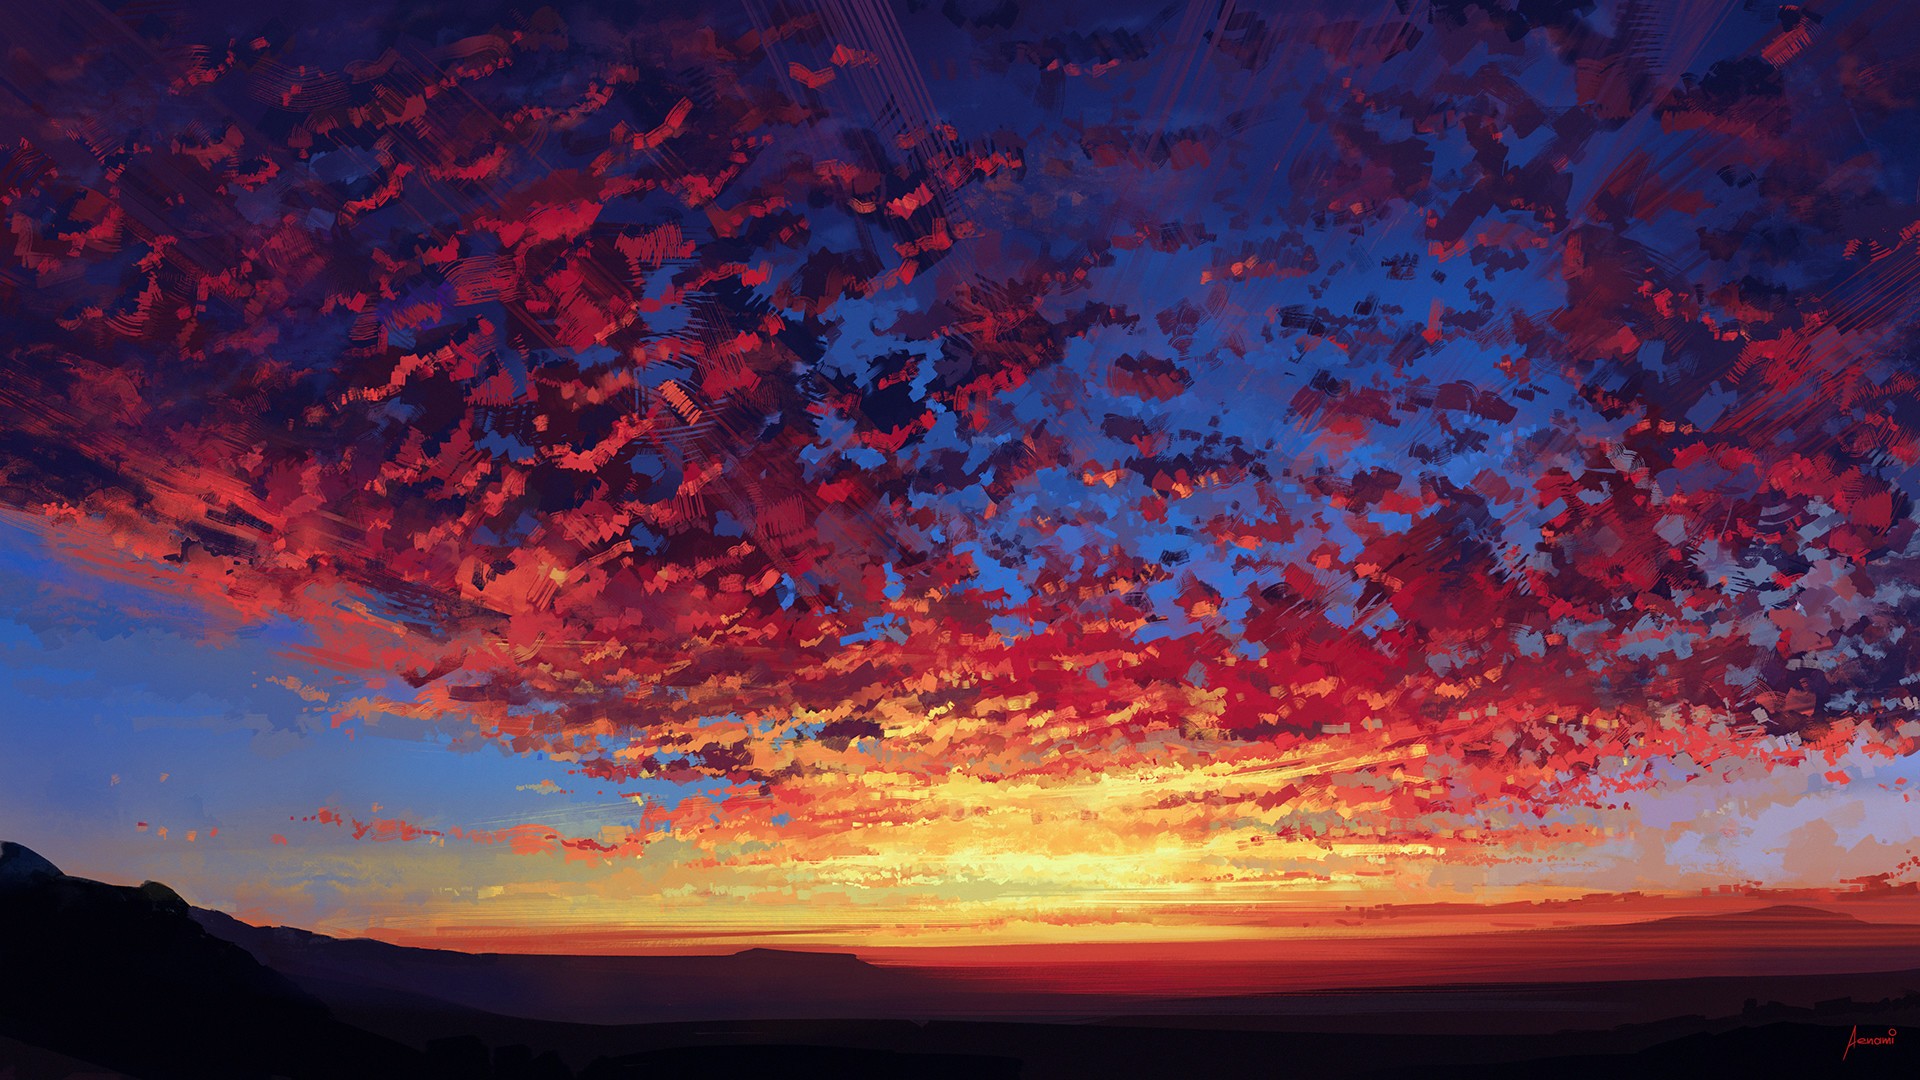 General 1920x1080 artwork Aenami clouds sky nature landscape ArtStation watermarked sunlight